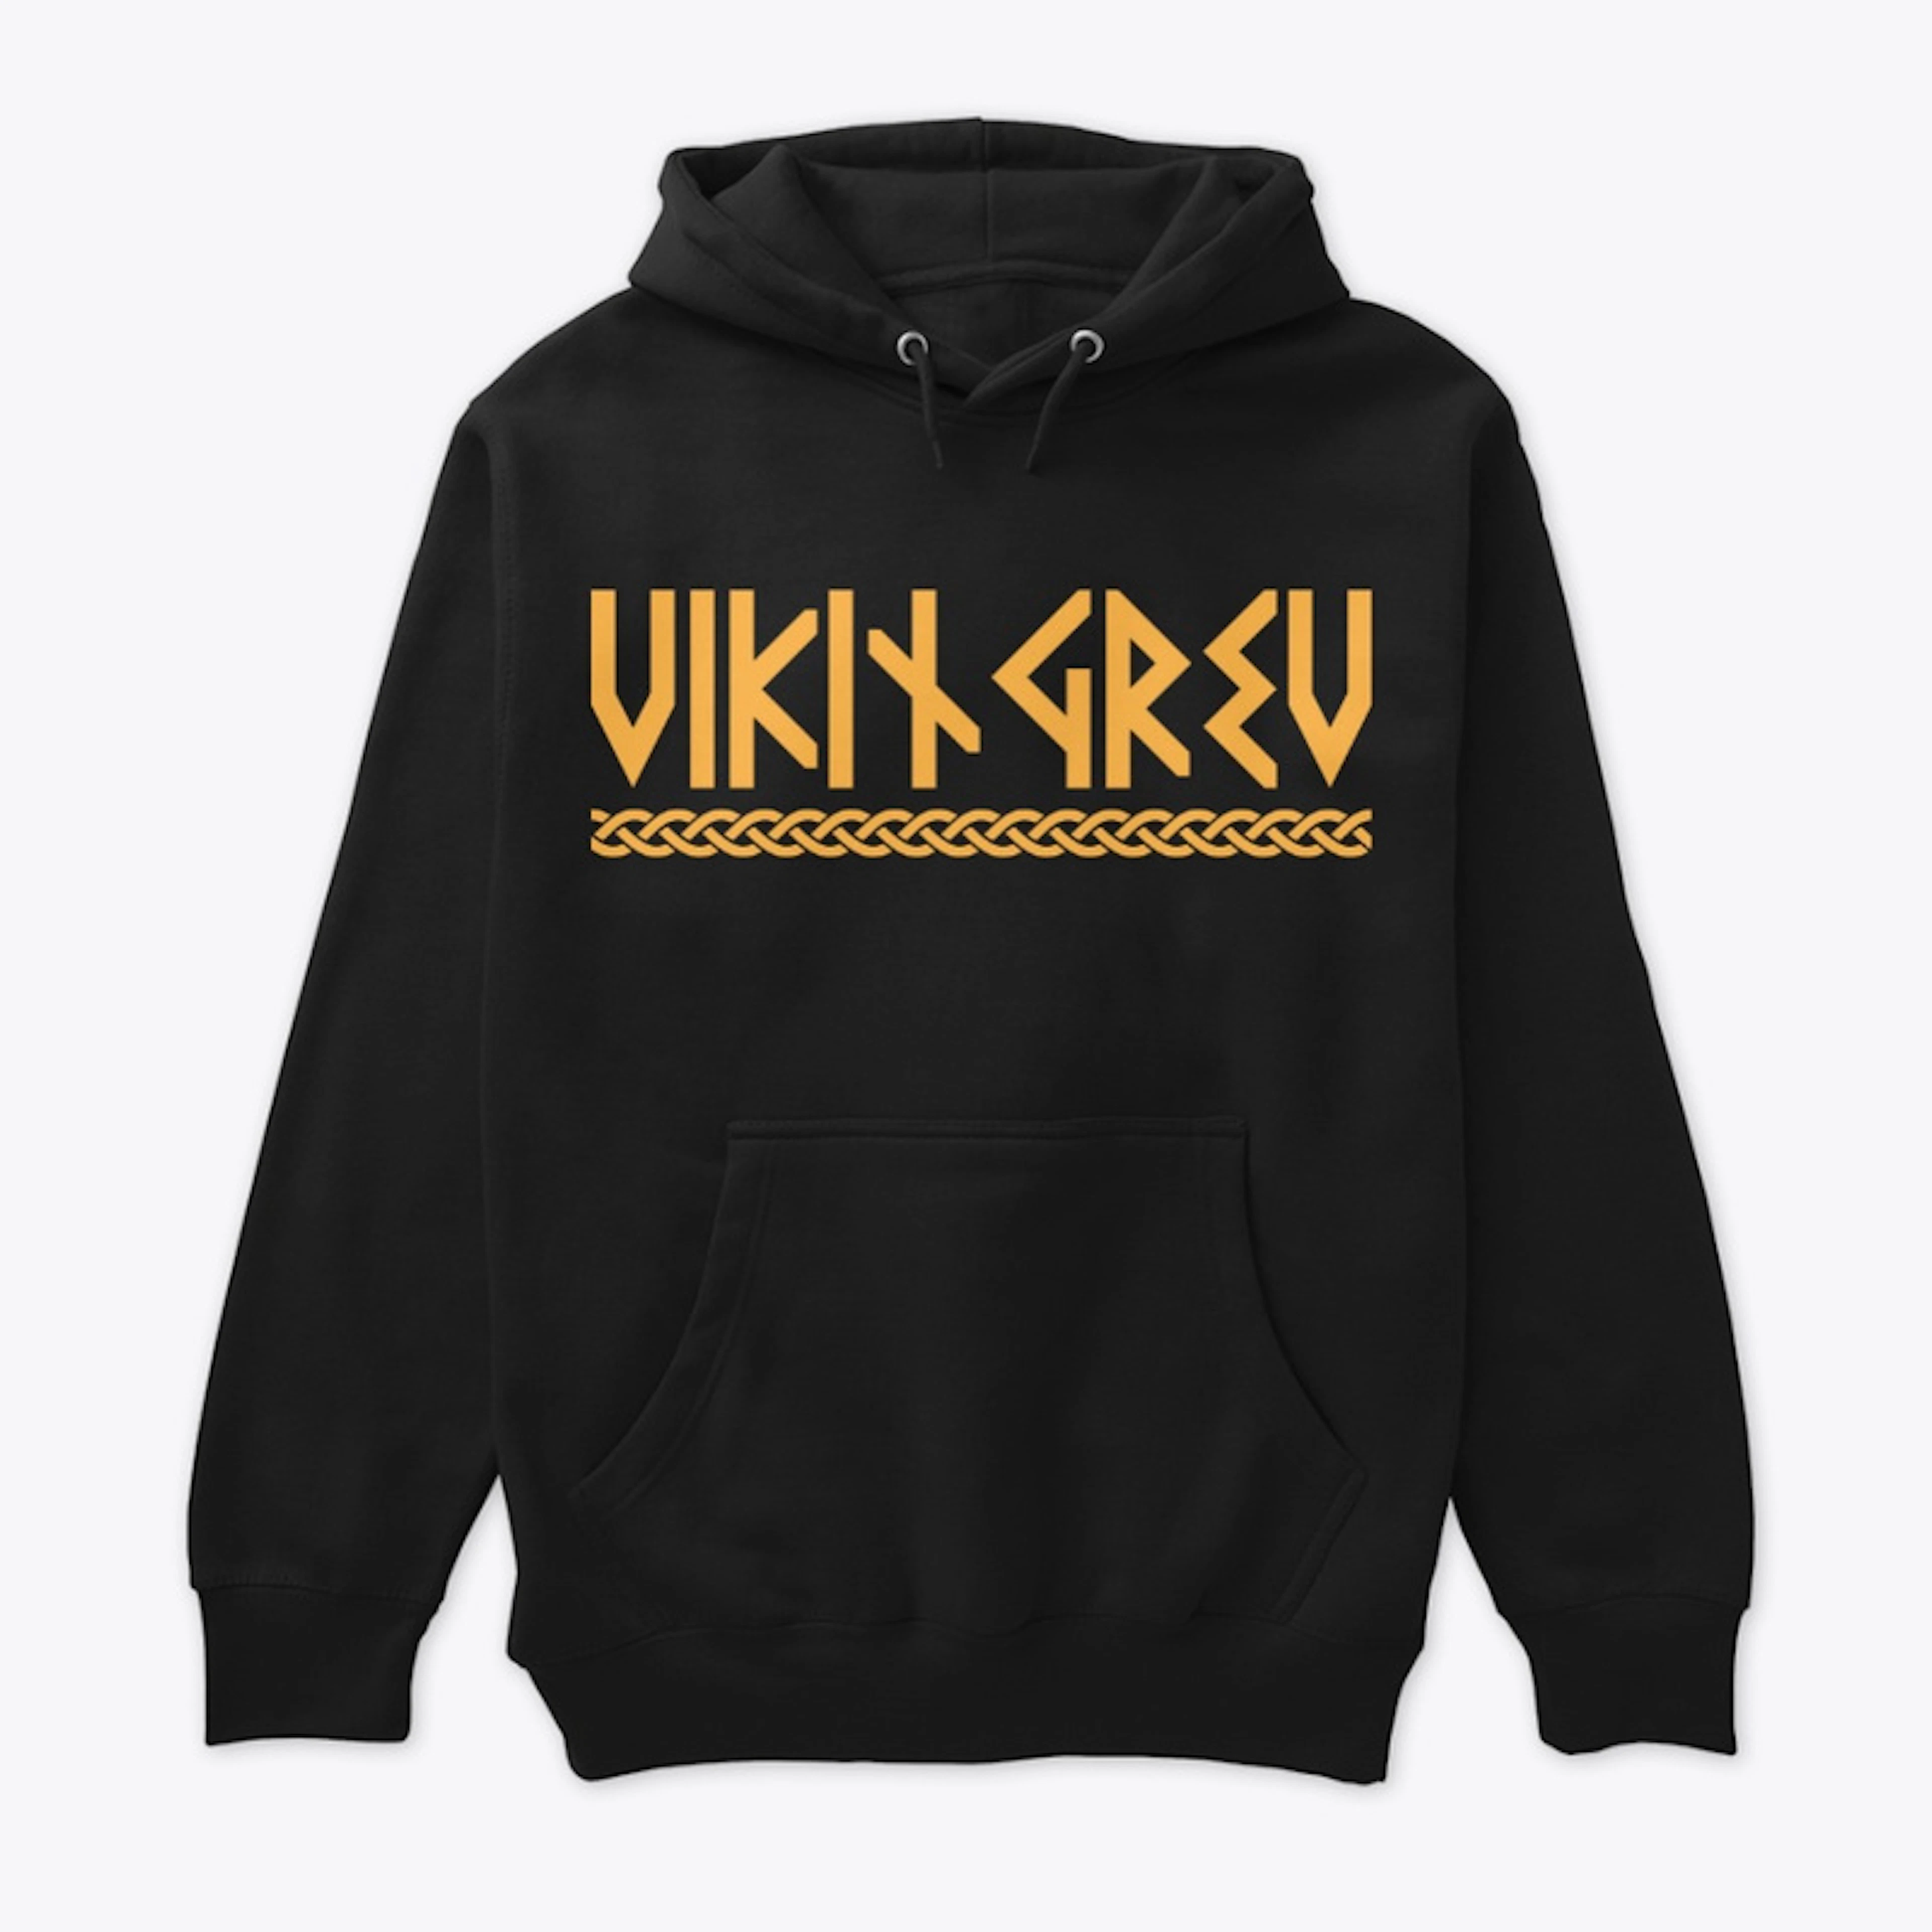 Viking "Rune" Design Hoodie